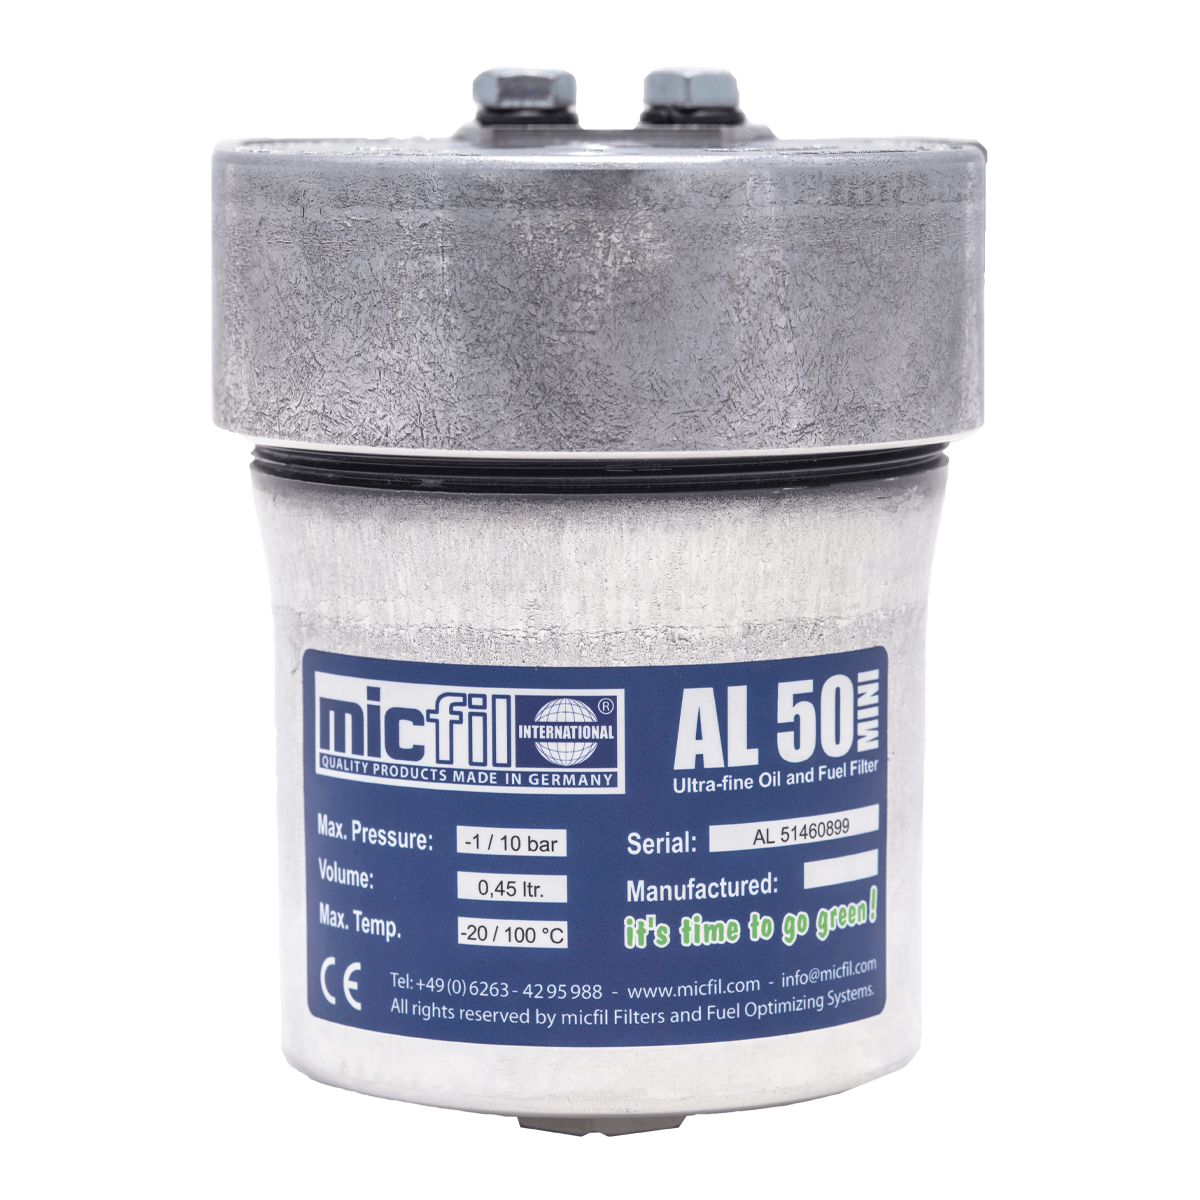 Micfil AL50MINI brandstoffilter - oliefilter systeem